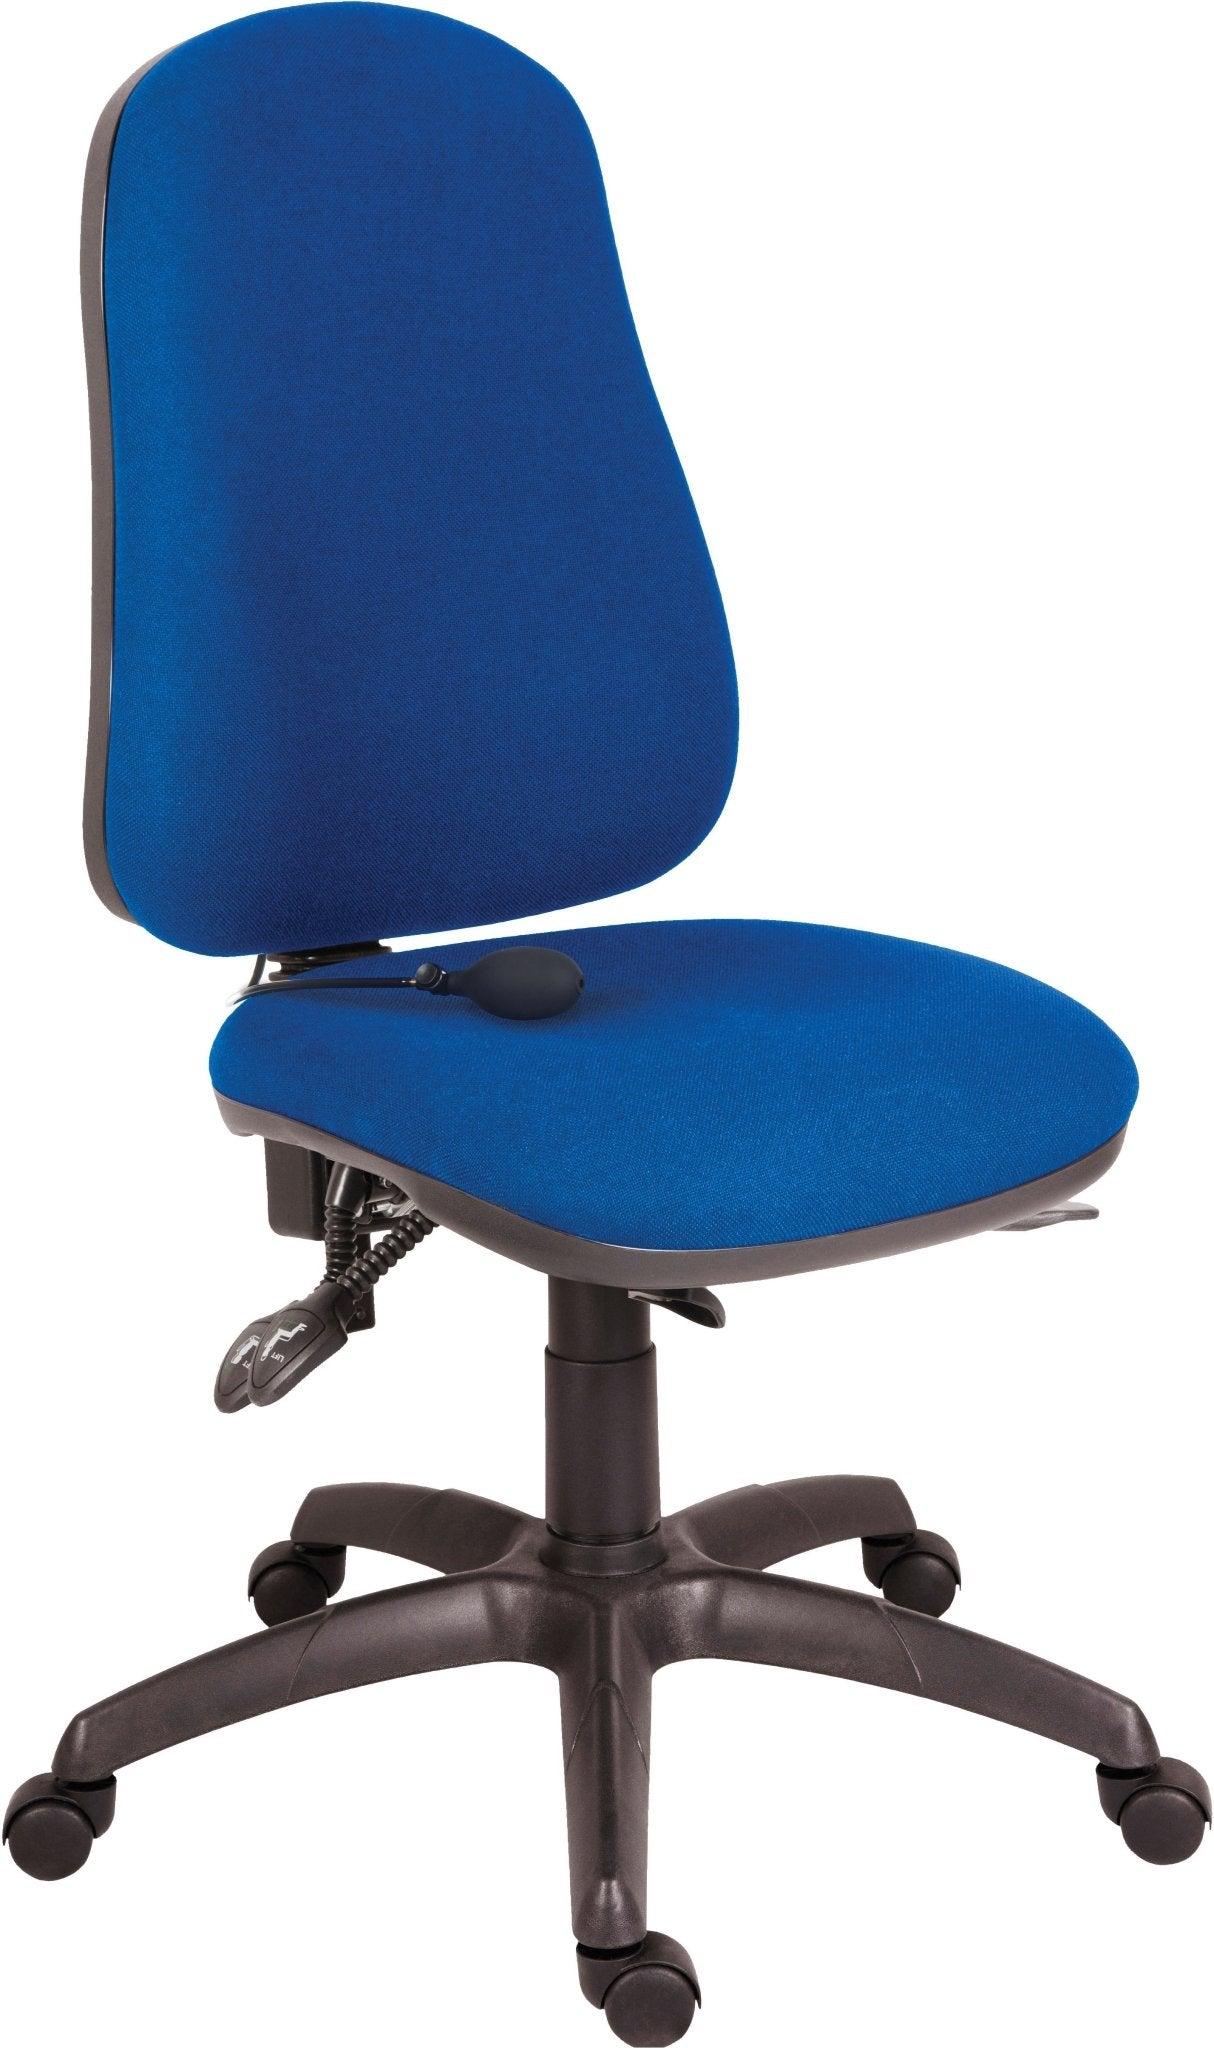 Ergo comfort air office chair (blue) - crimblefest furniture - image 1